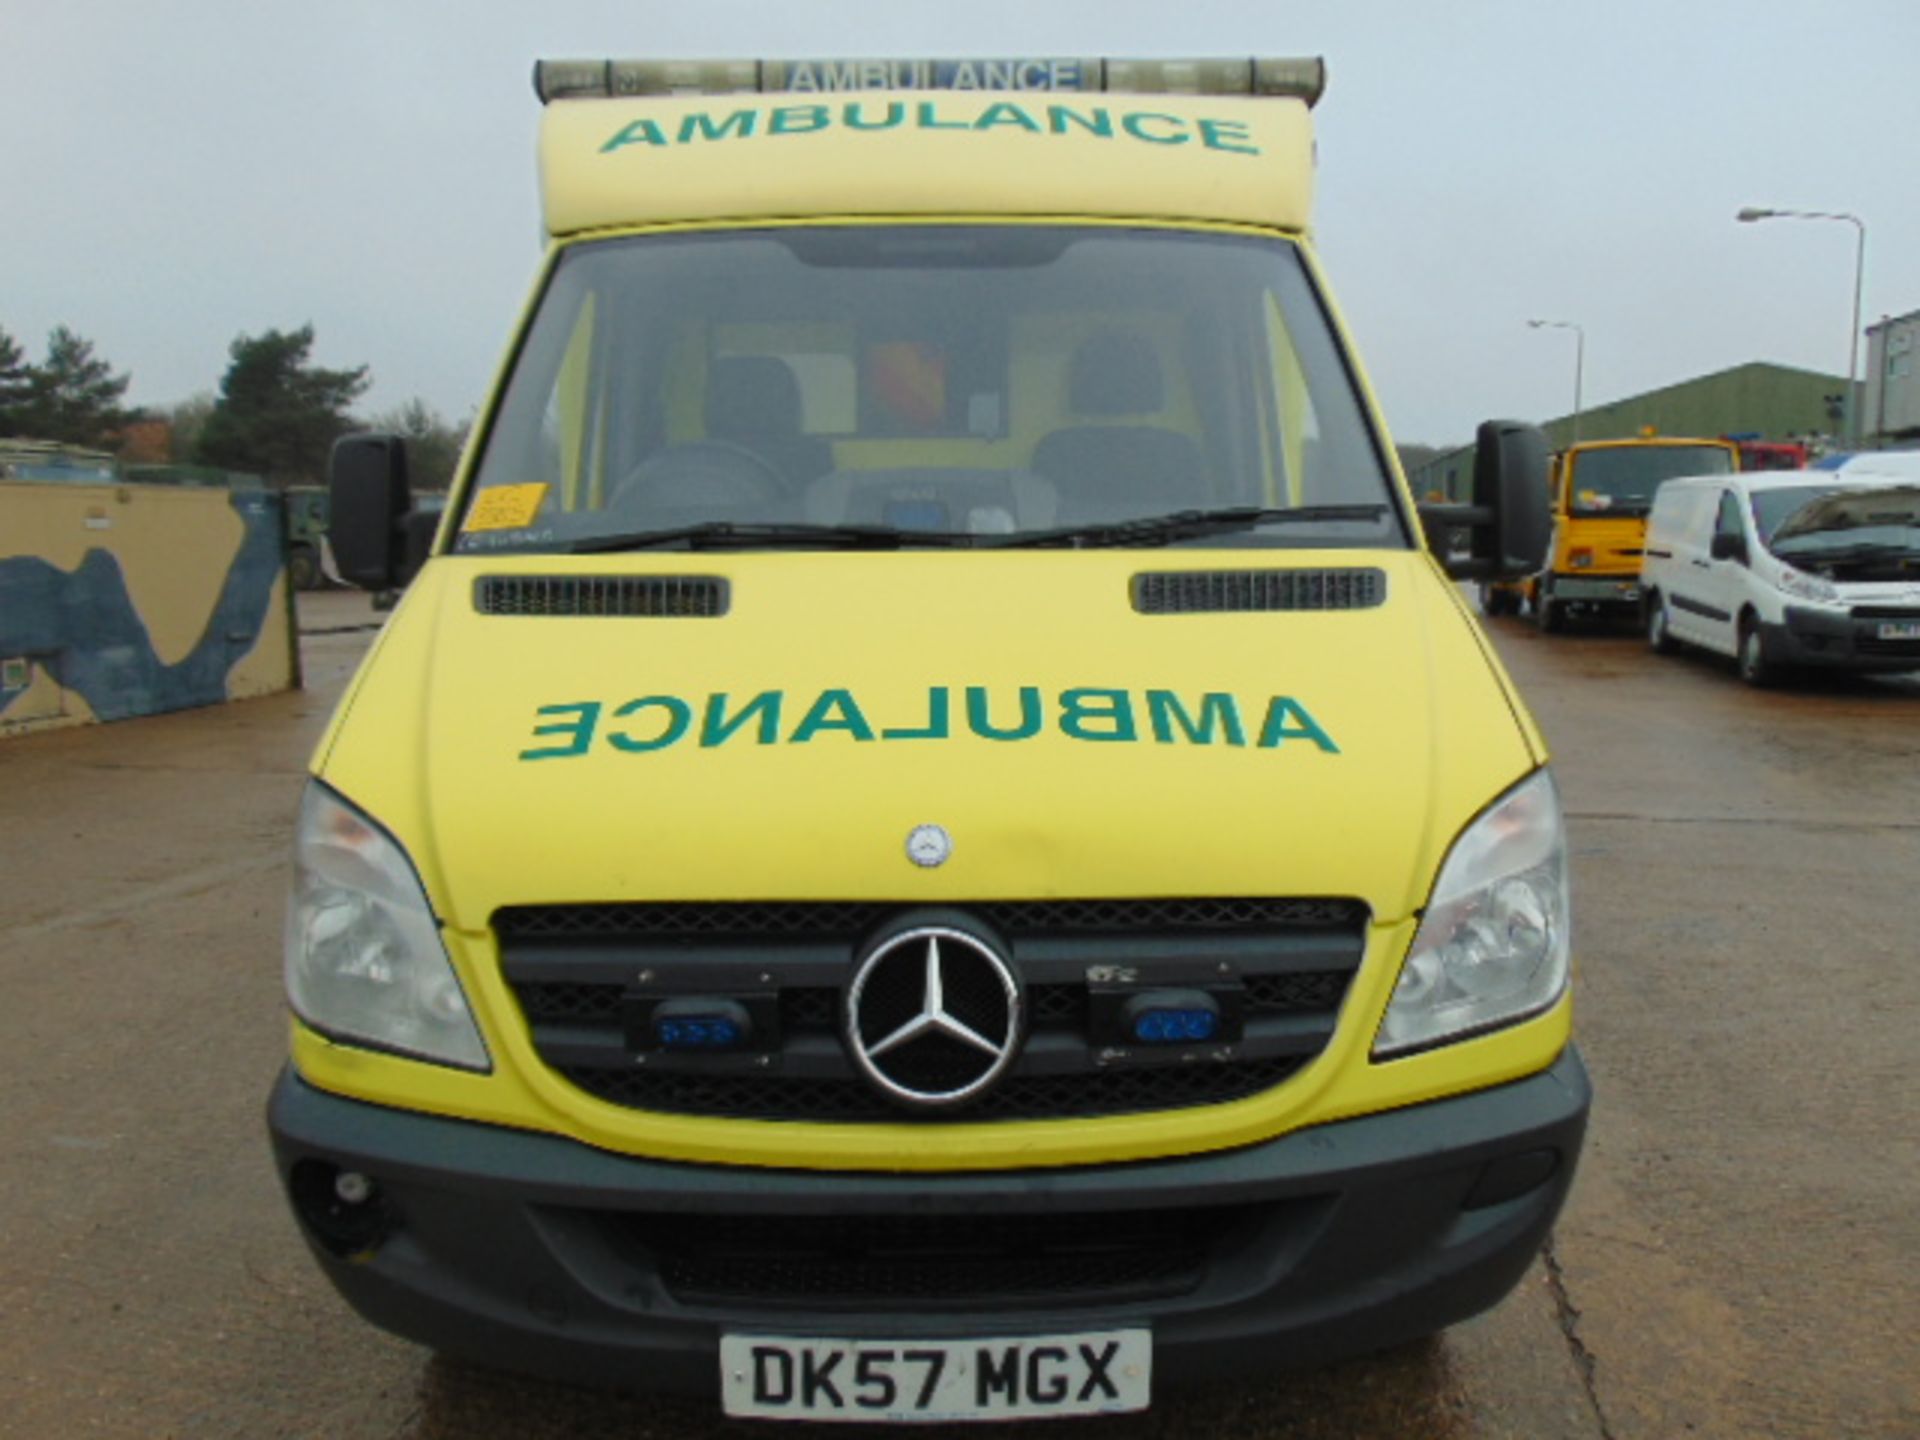 Mercedes Sprinter 515 CDI Turbo diesel ambulance - Image 2 of 18